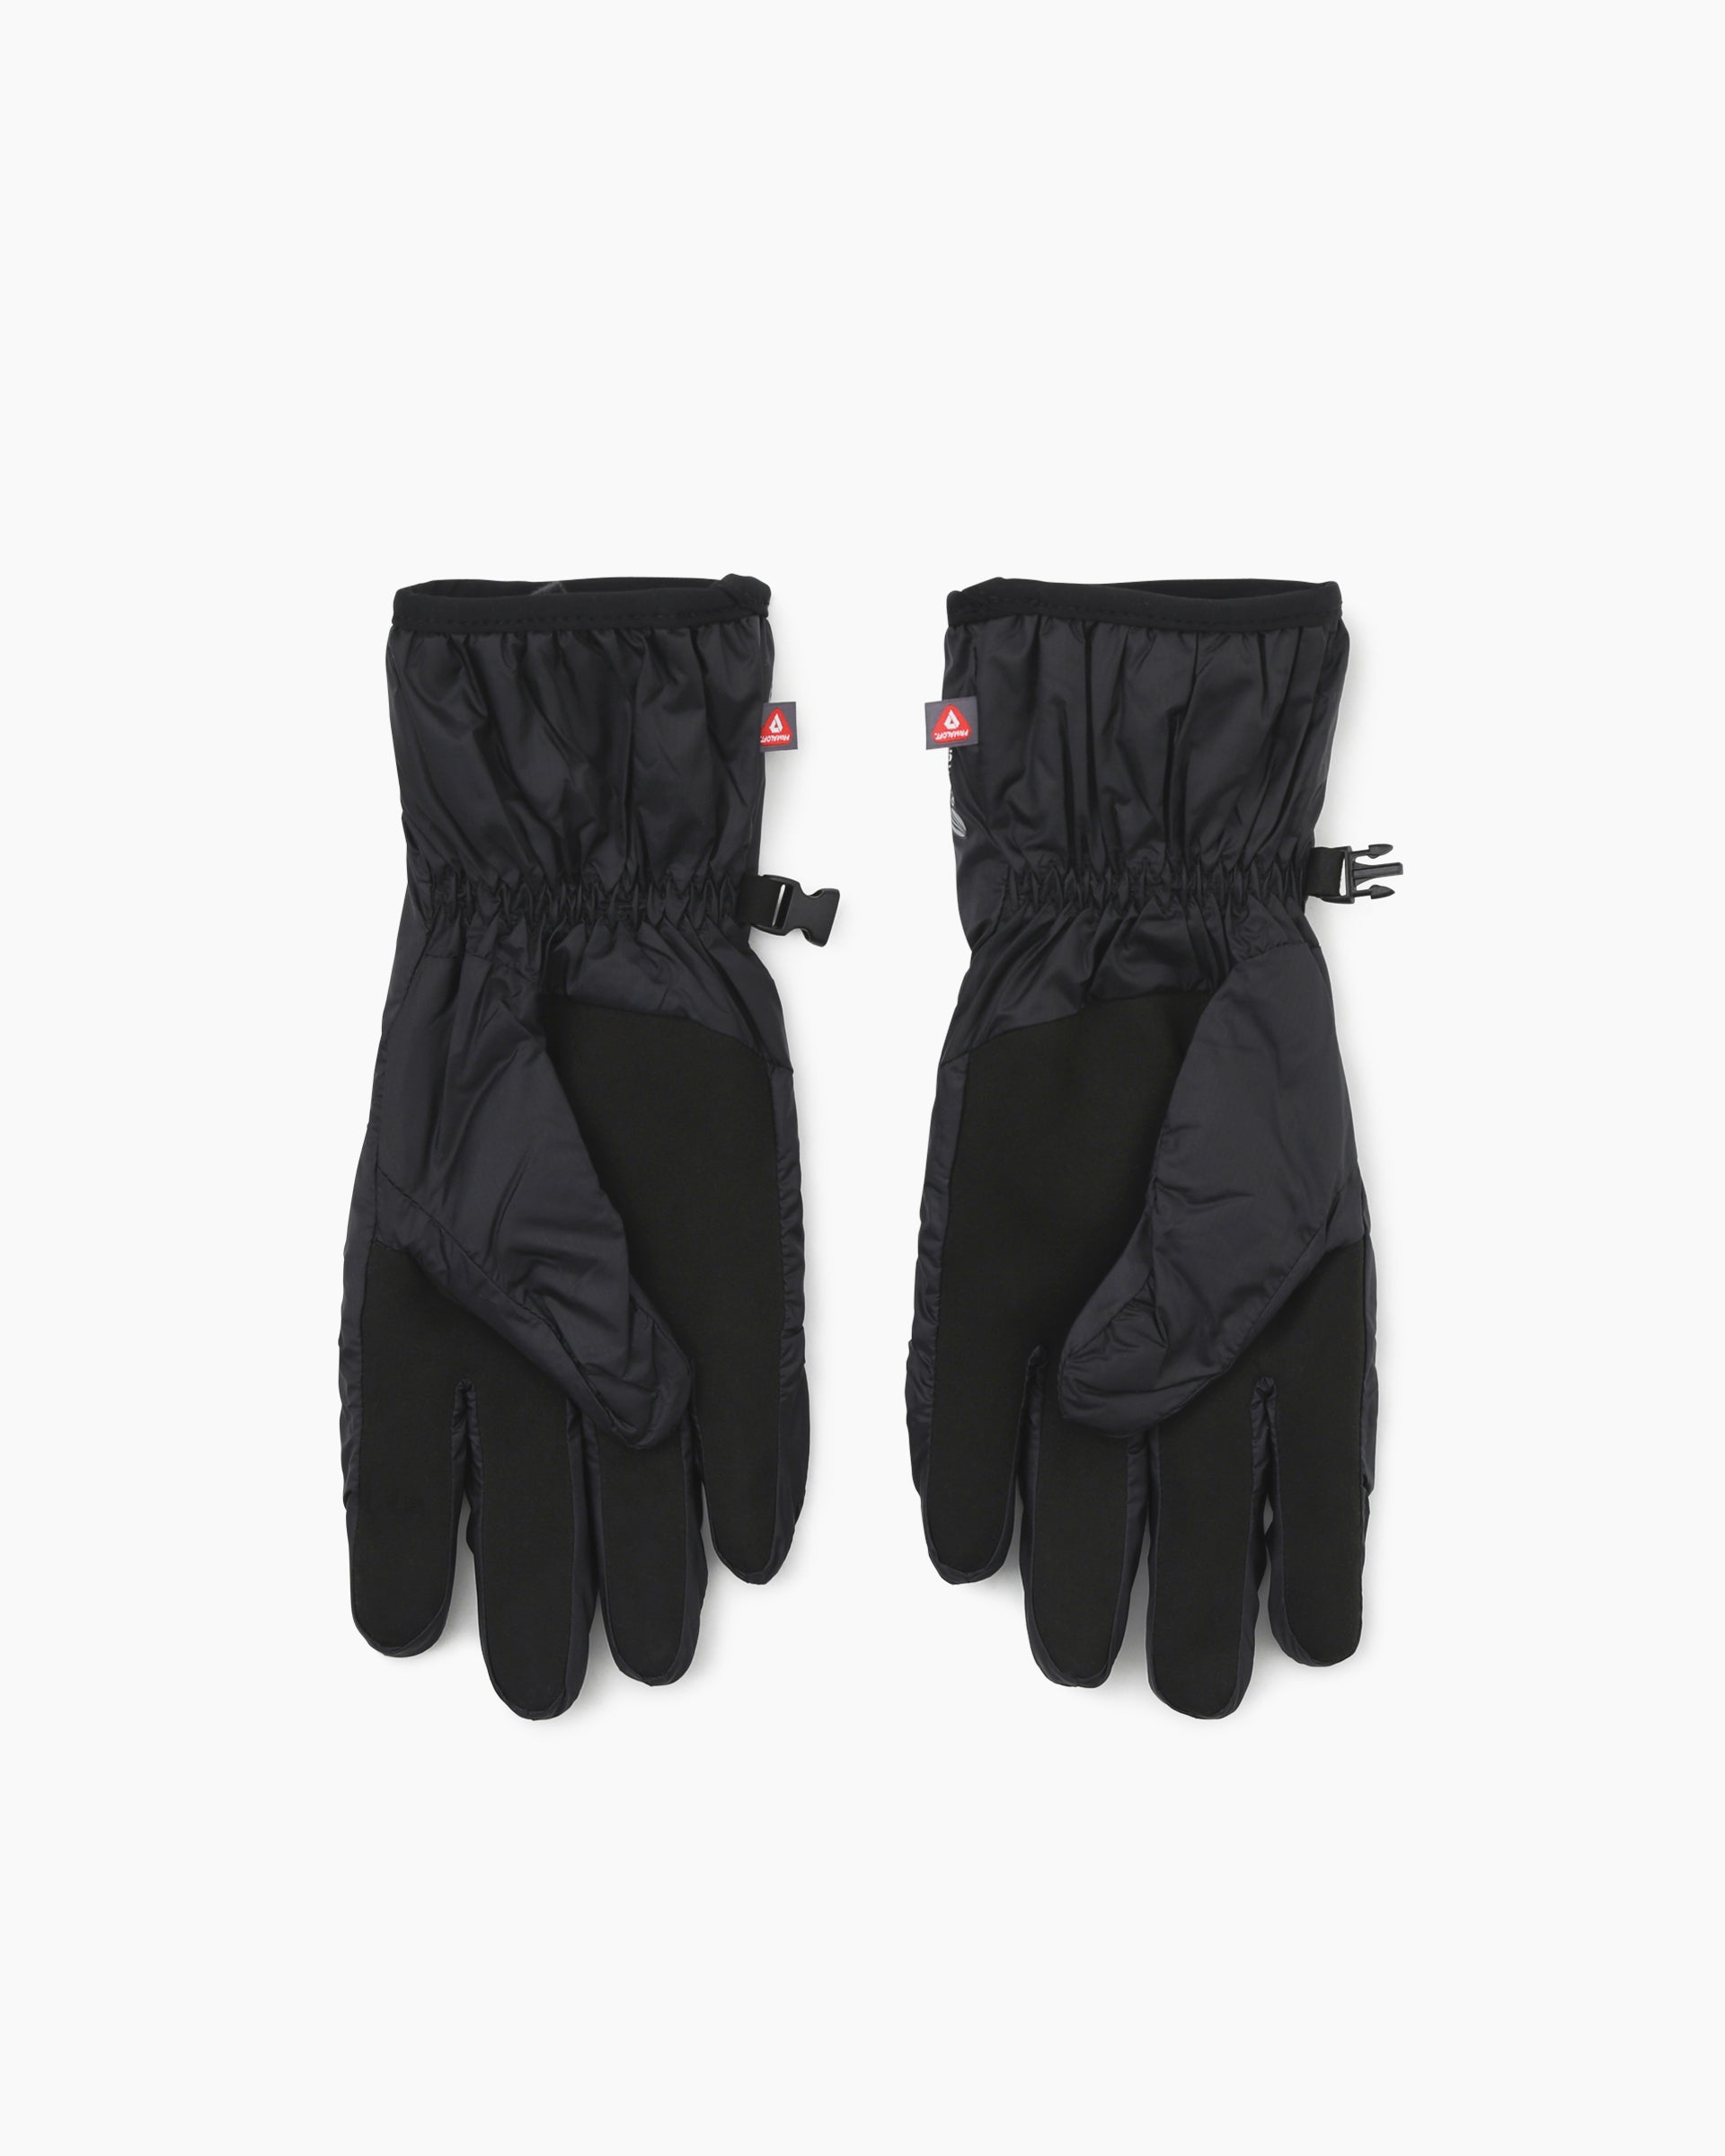 Xenon Gloves Black